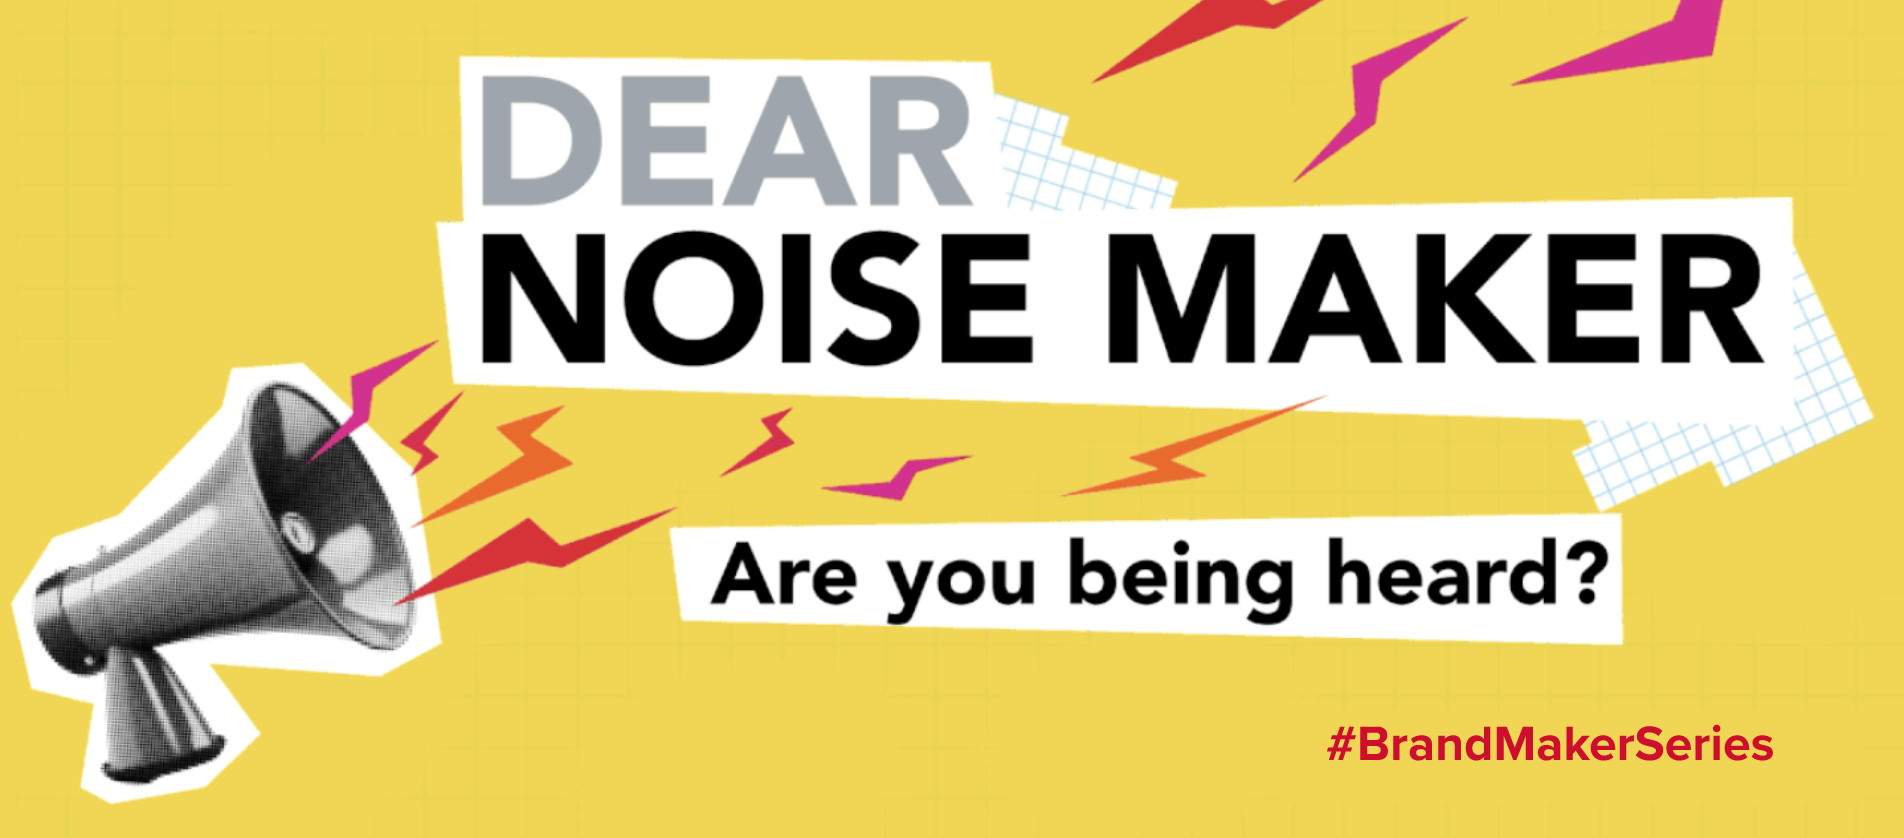 Dear Noise Maker - Are you being heard? #BrandMakerSeries